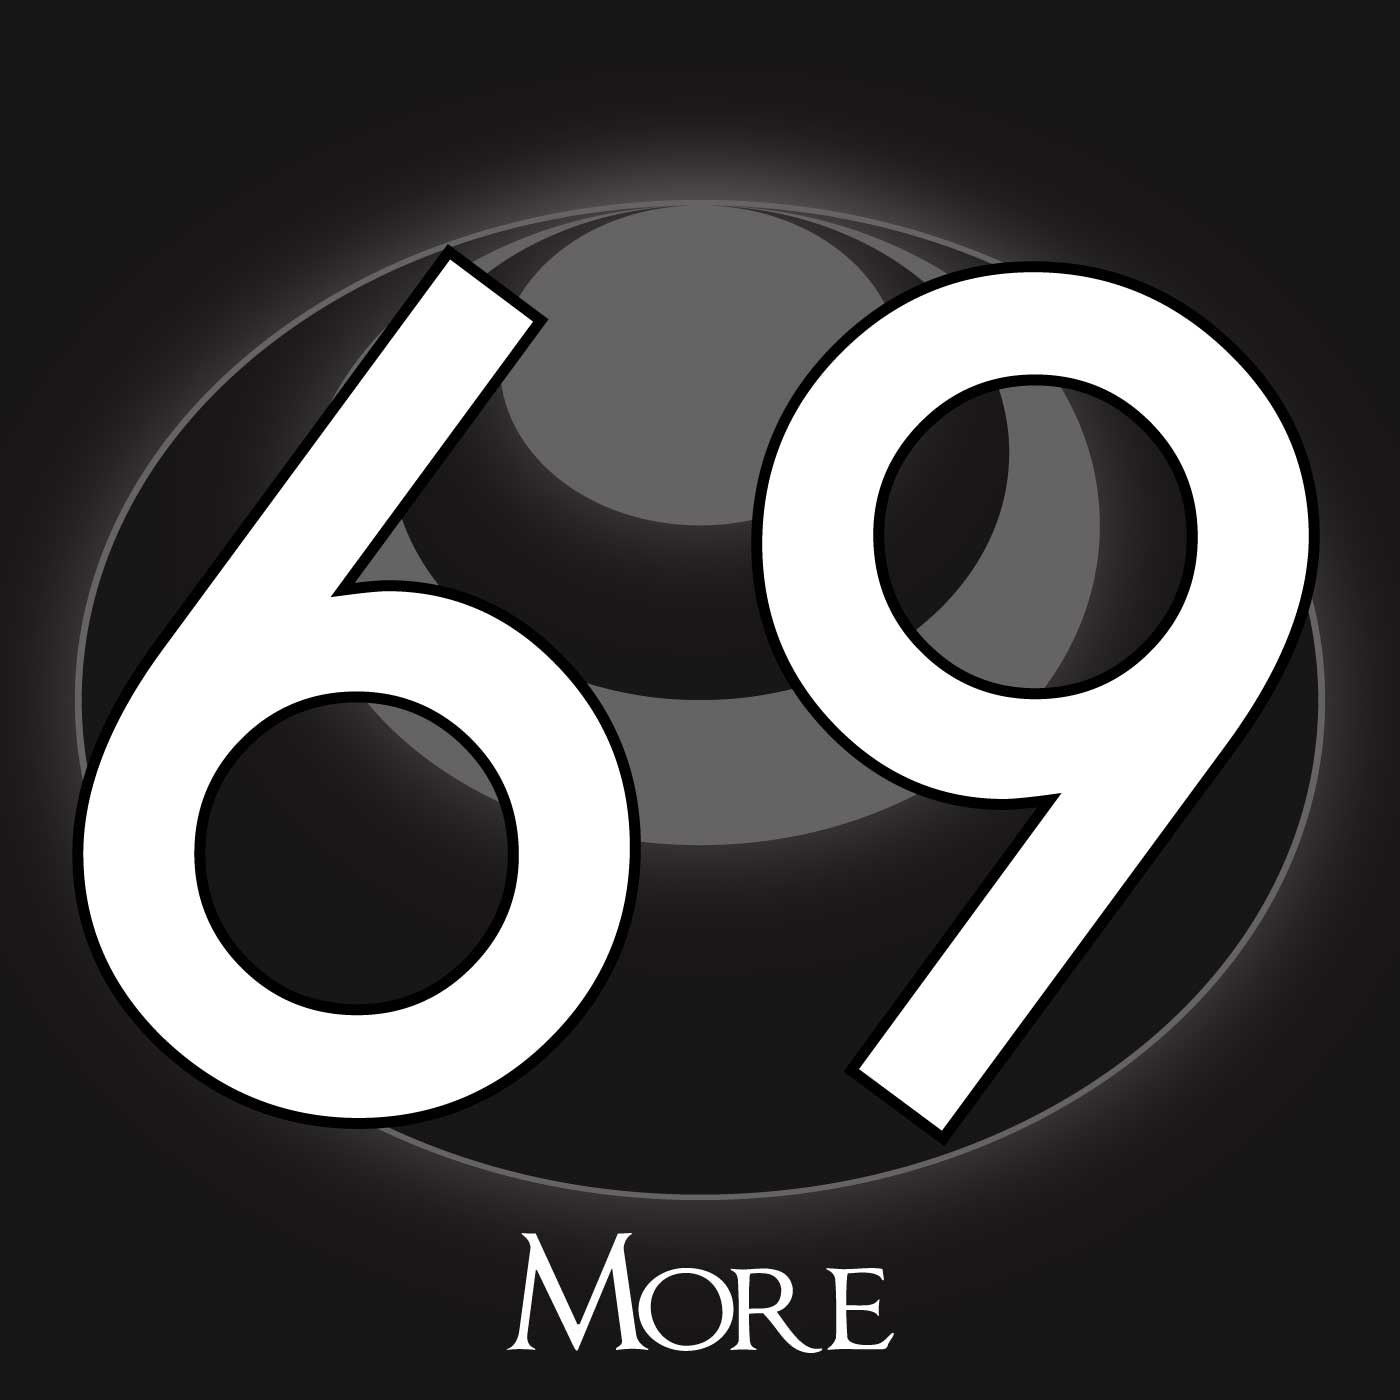 69 – More